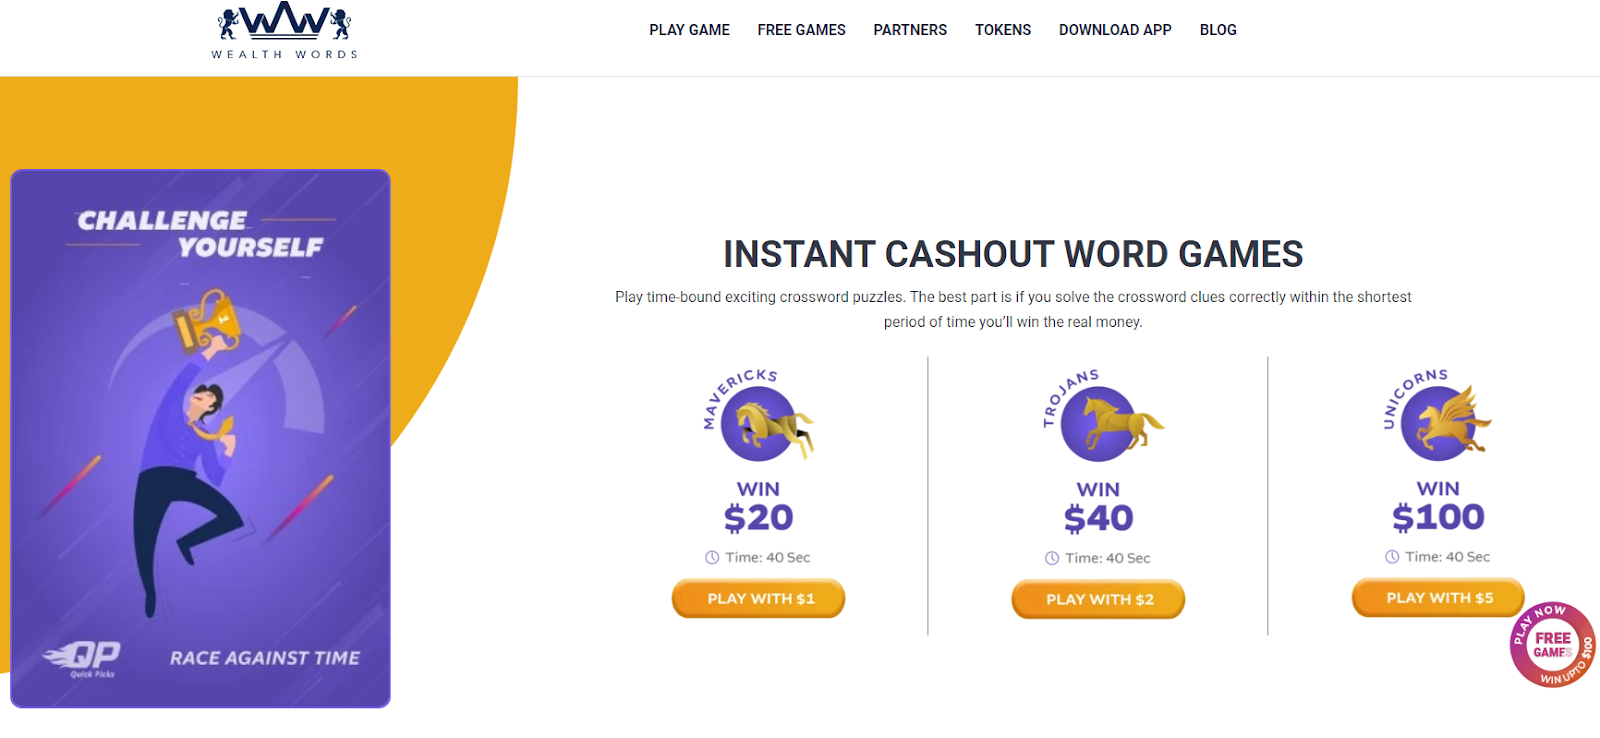 a screenshot of Wealth Words website